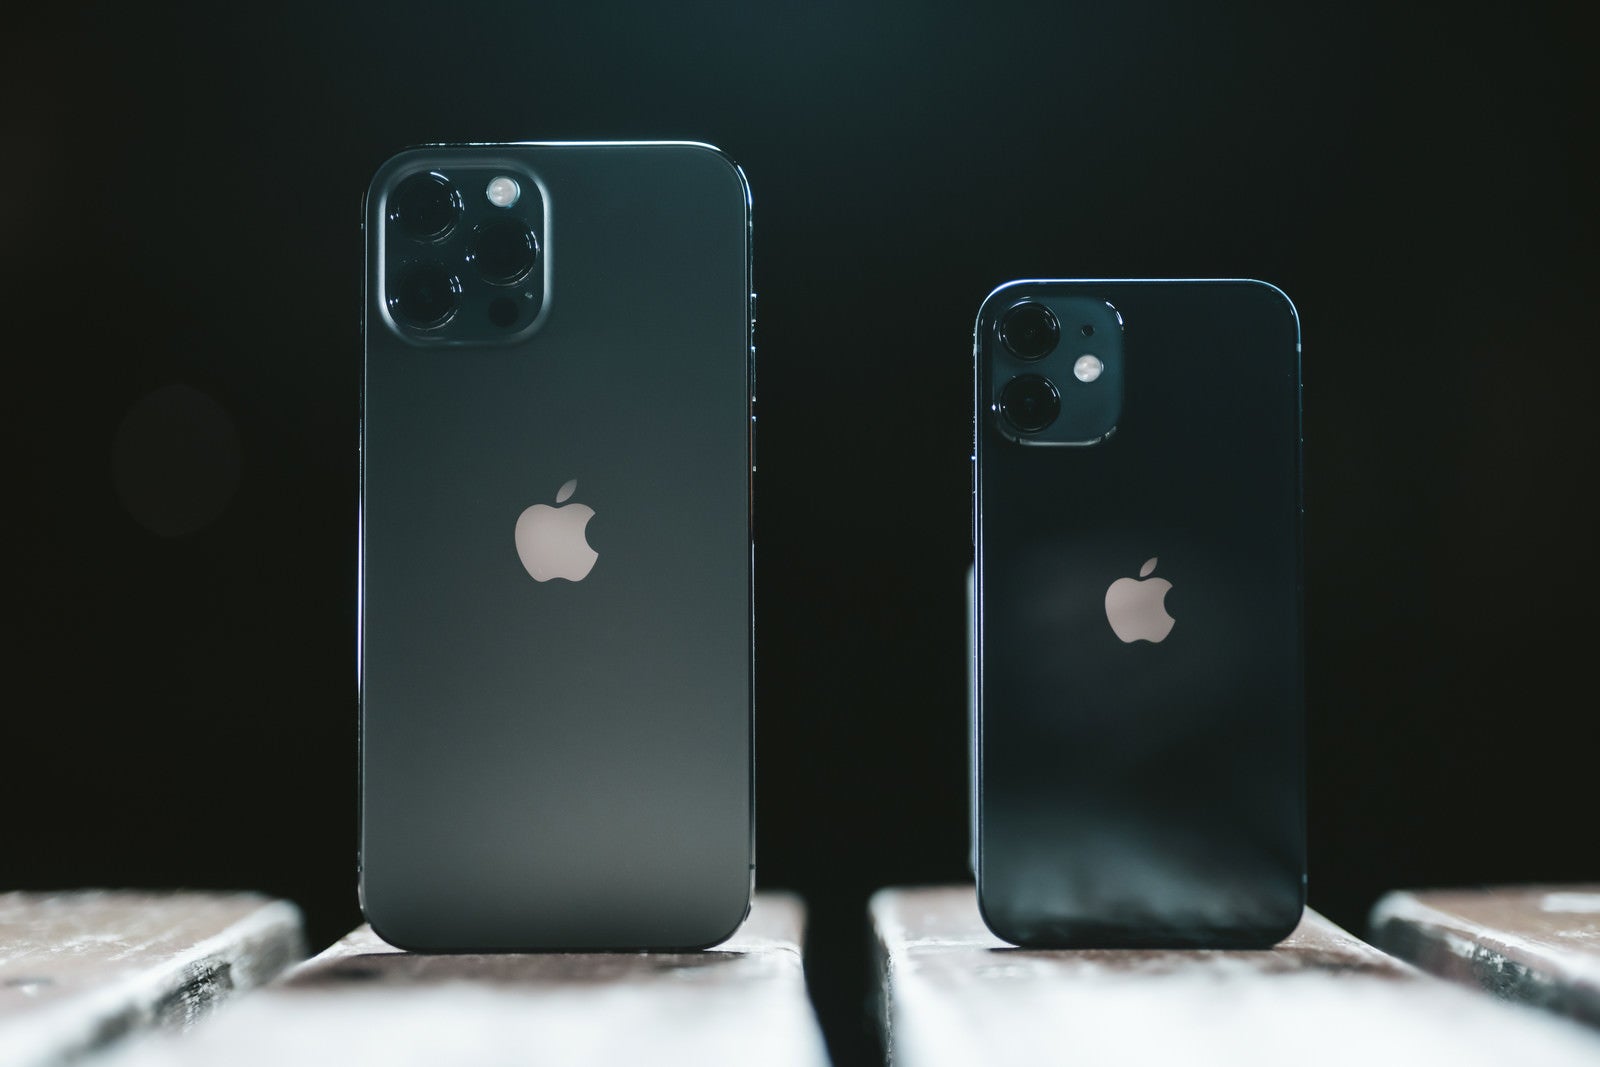 「 iPhone 12 Pro Max と iPhone 12 mini のサイズ比べ」の写真